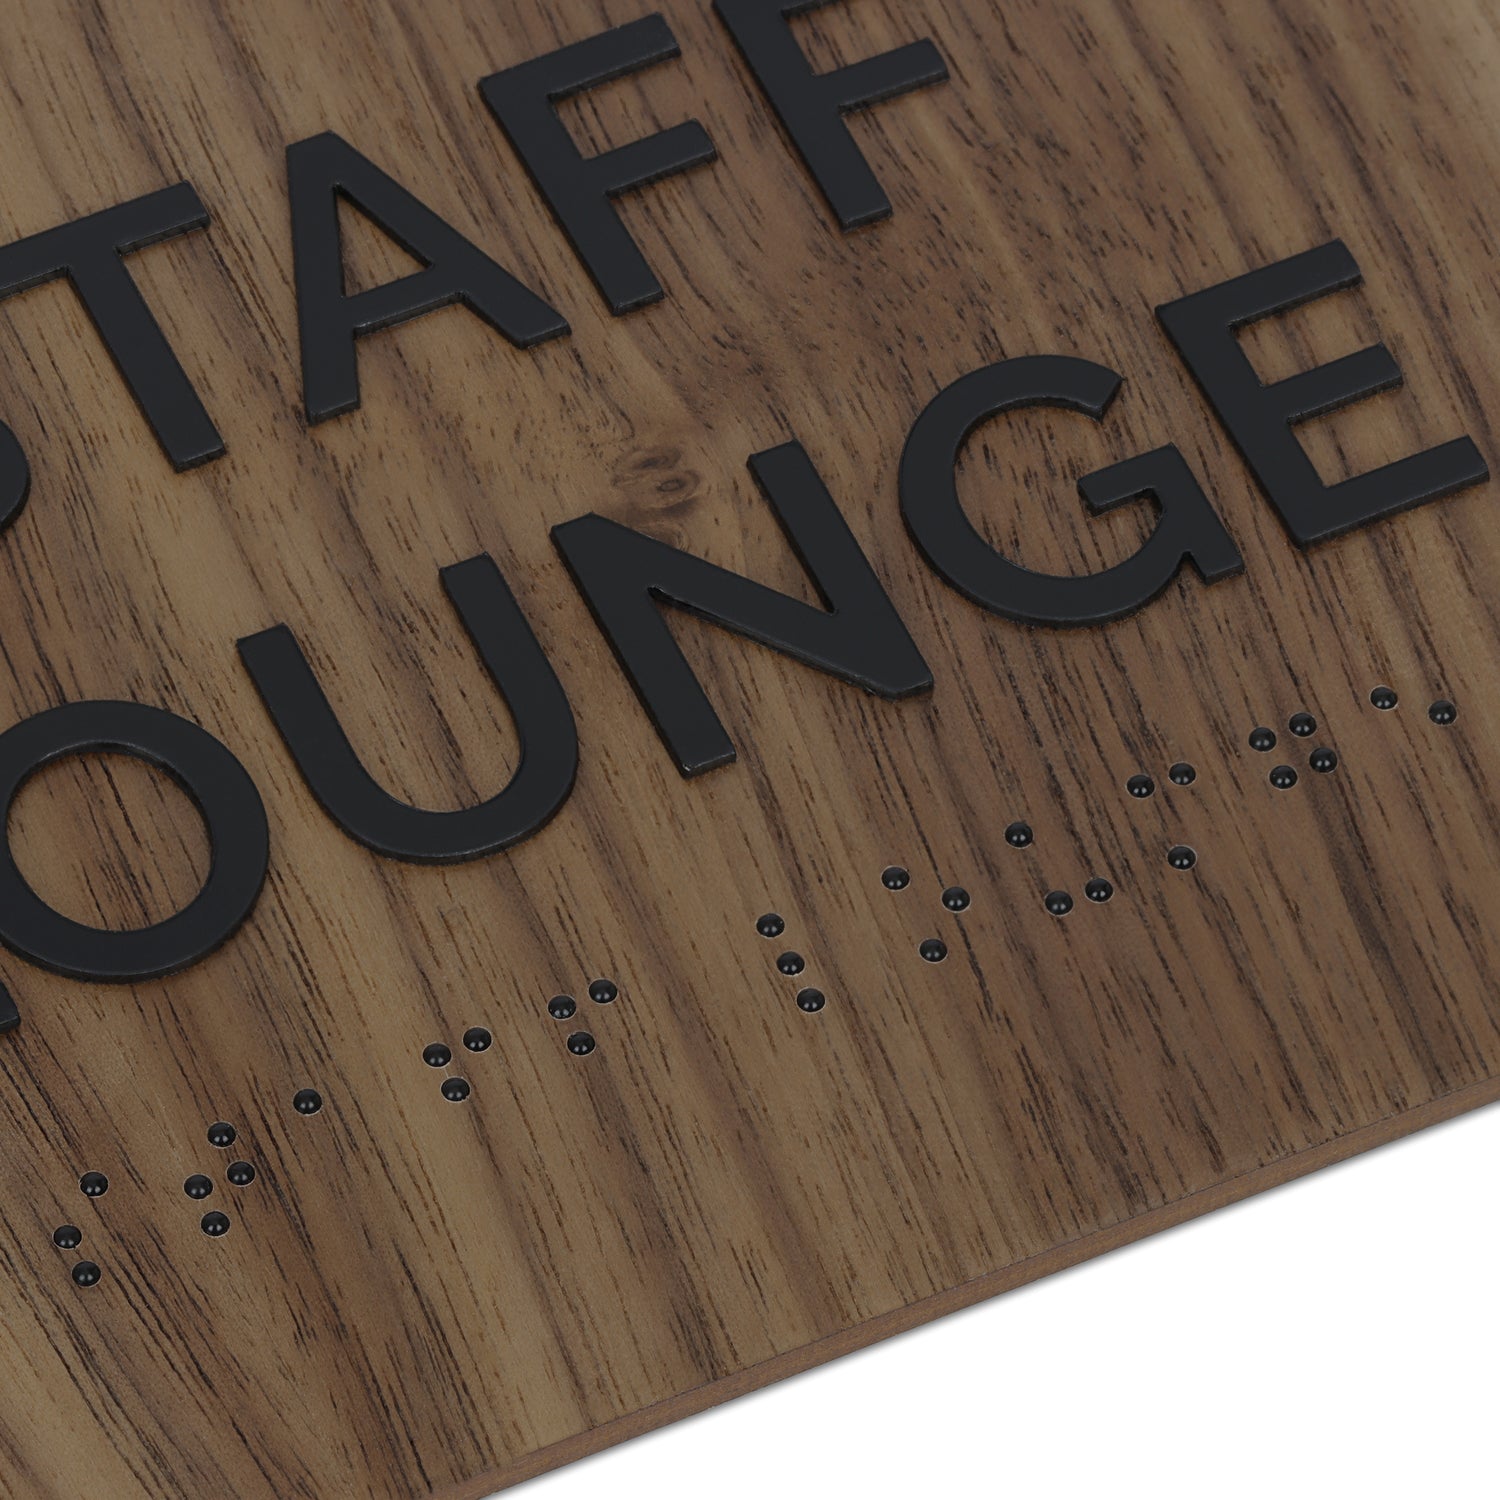 Acrylic and Wood Staff Lounge Sign